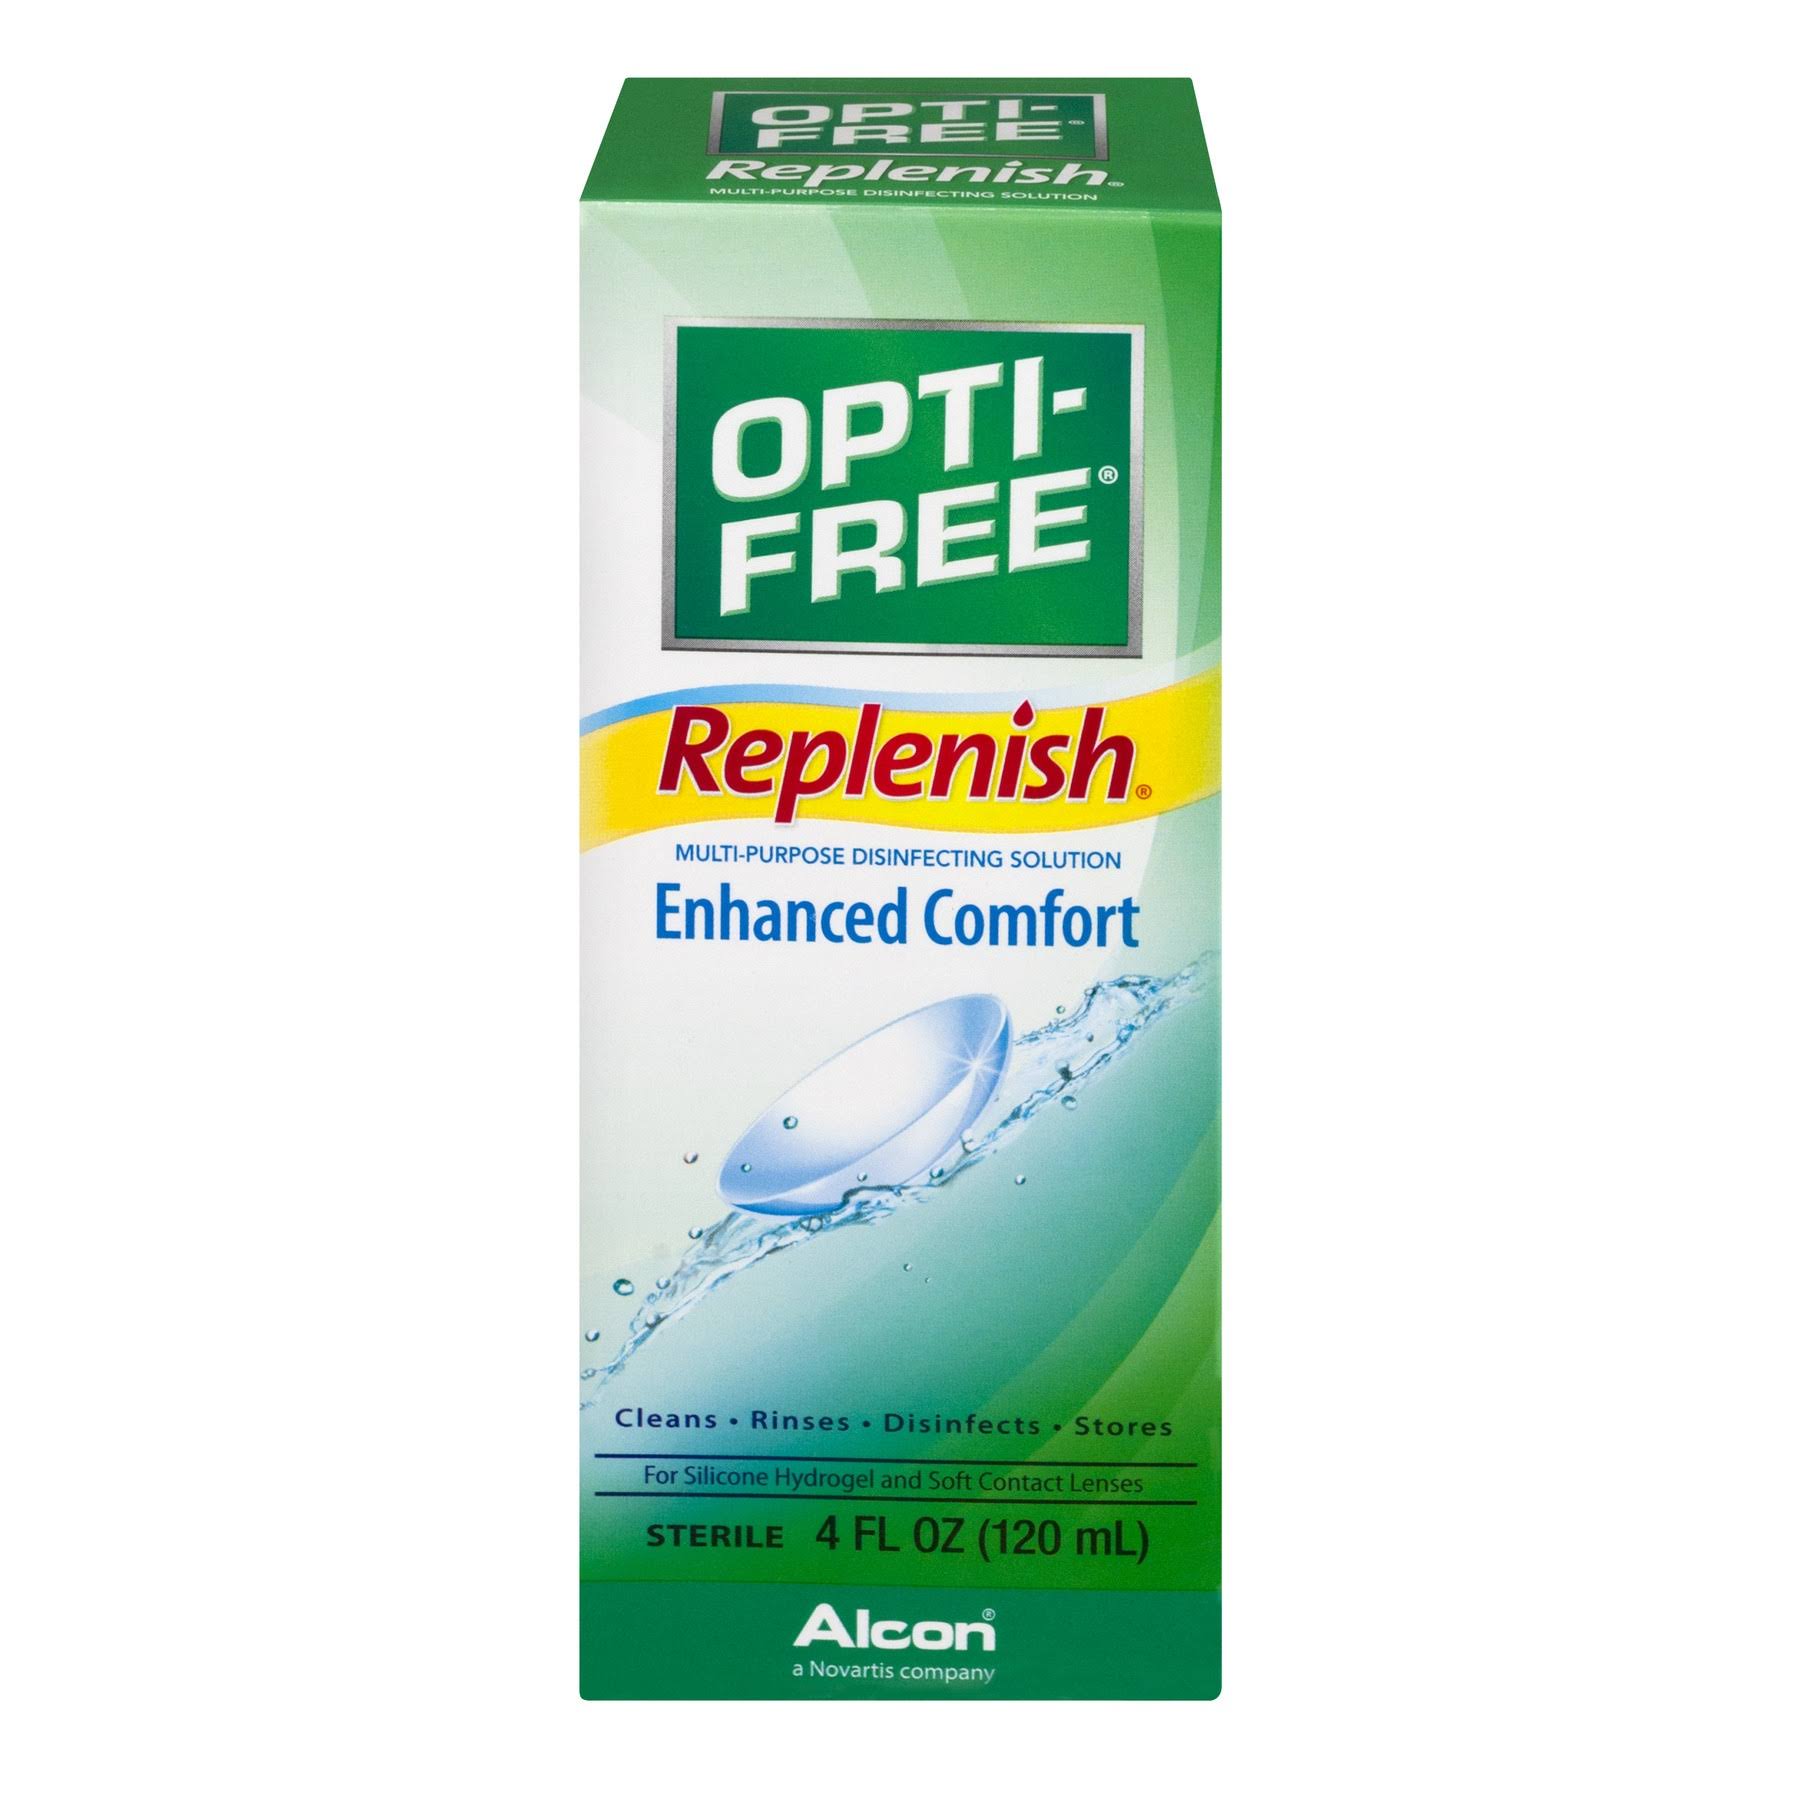 Alcon Opti-Free Replenish Sterile Enhanced Comfort Multi-Purpose Disinfecting Solution - 4oz